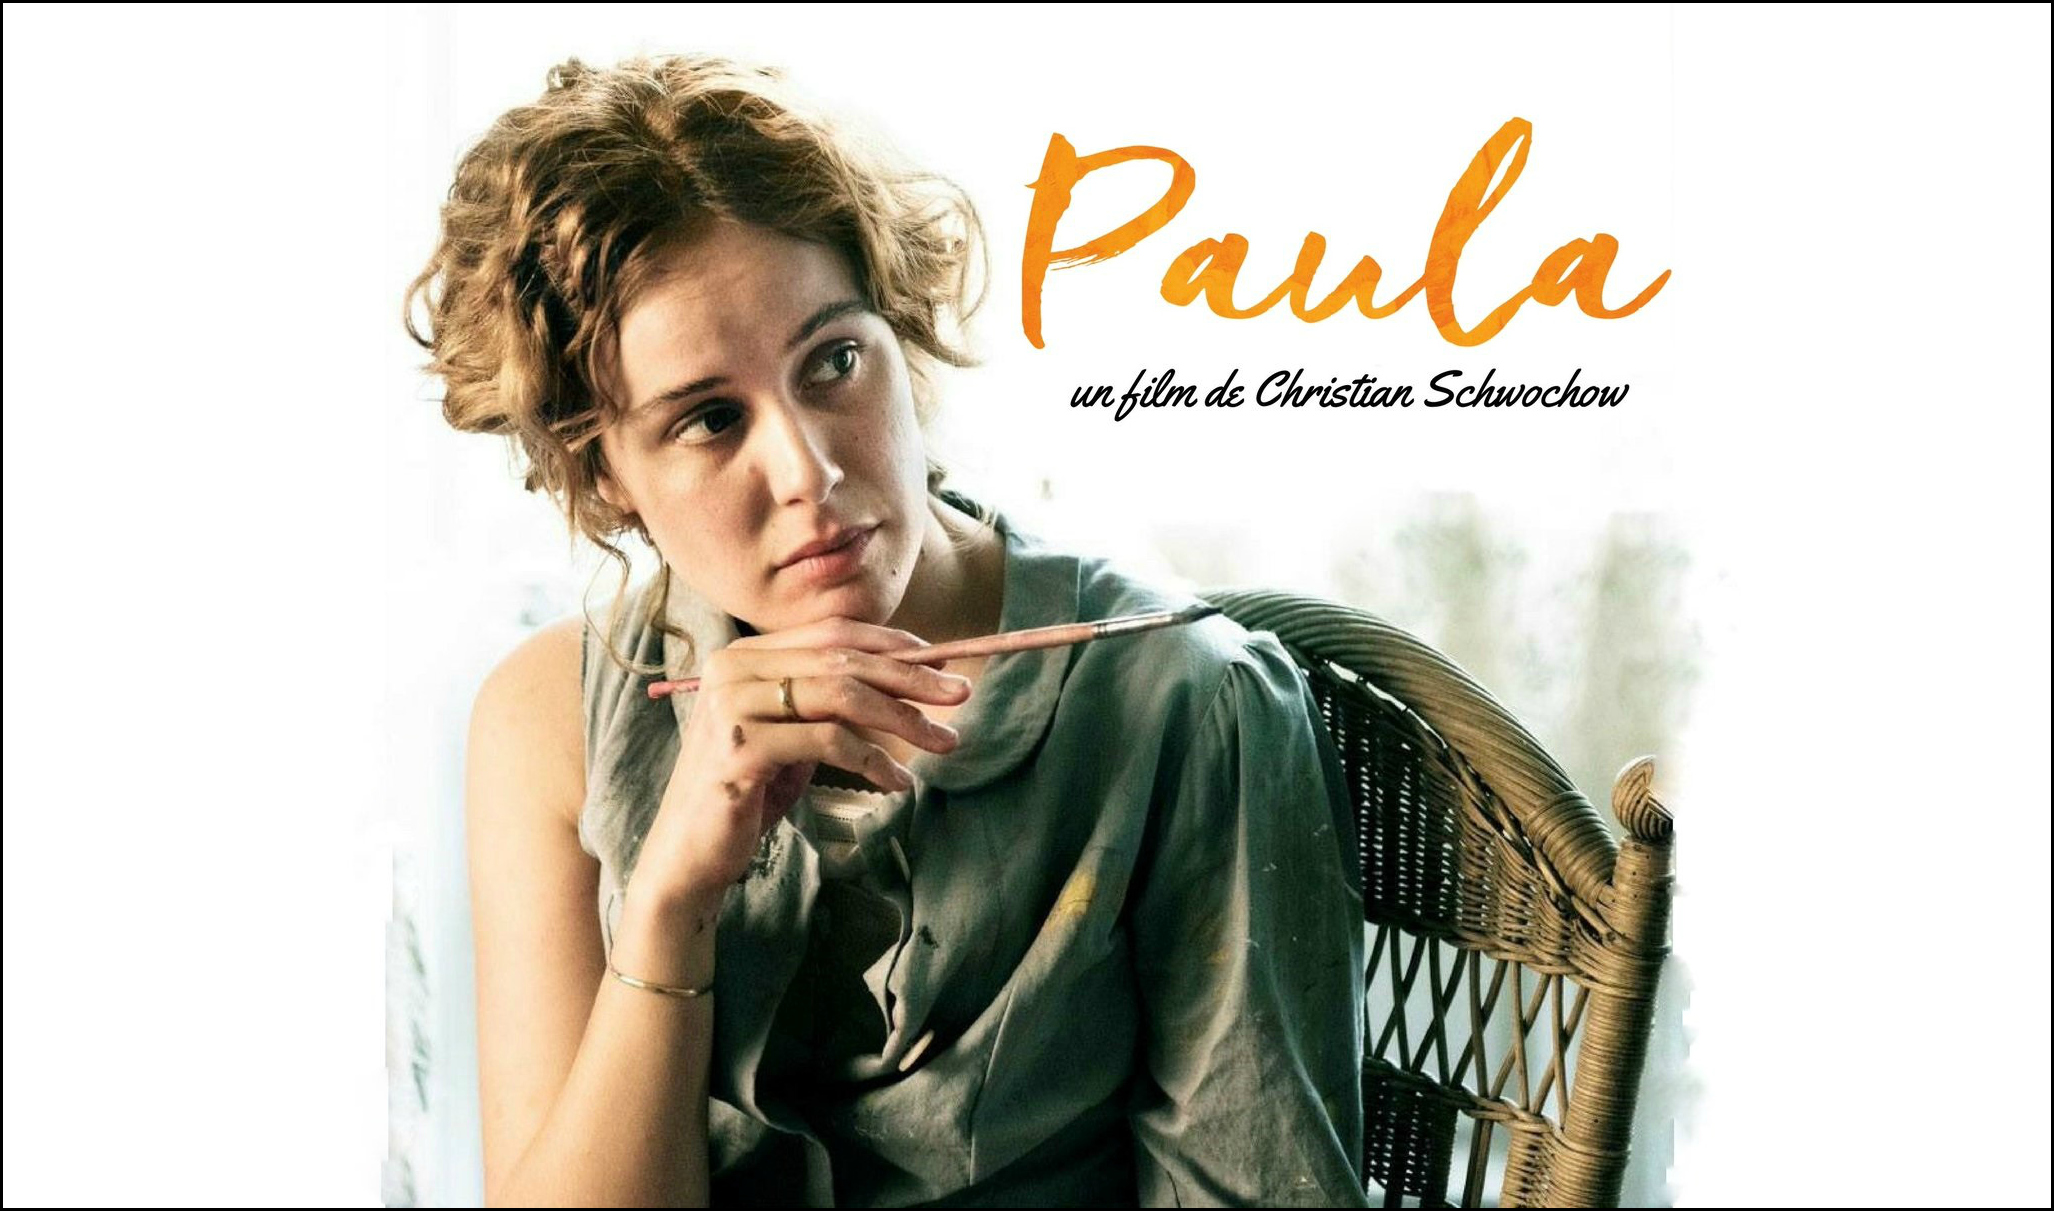 Paula 1